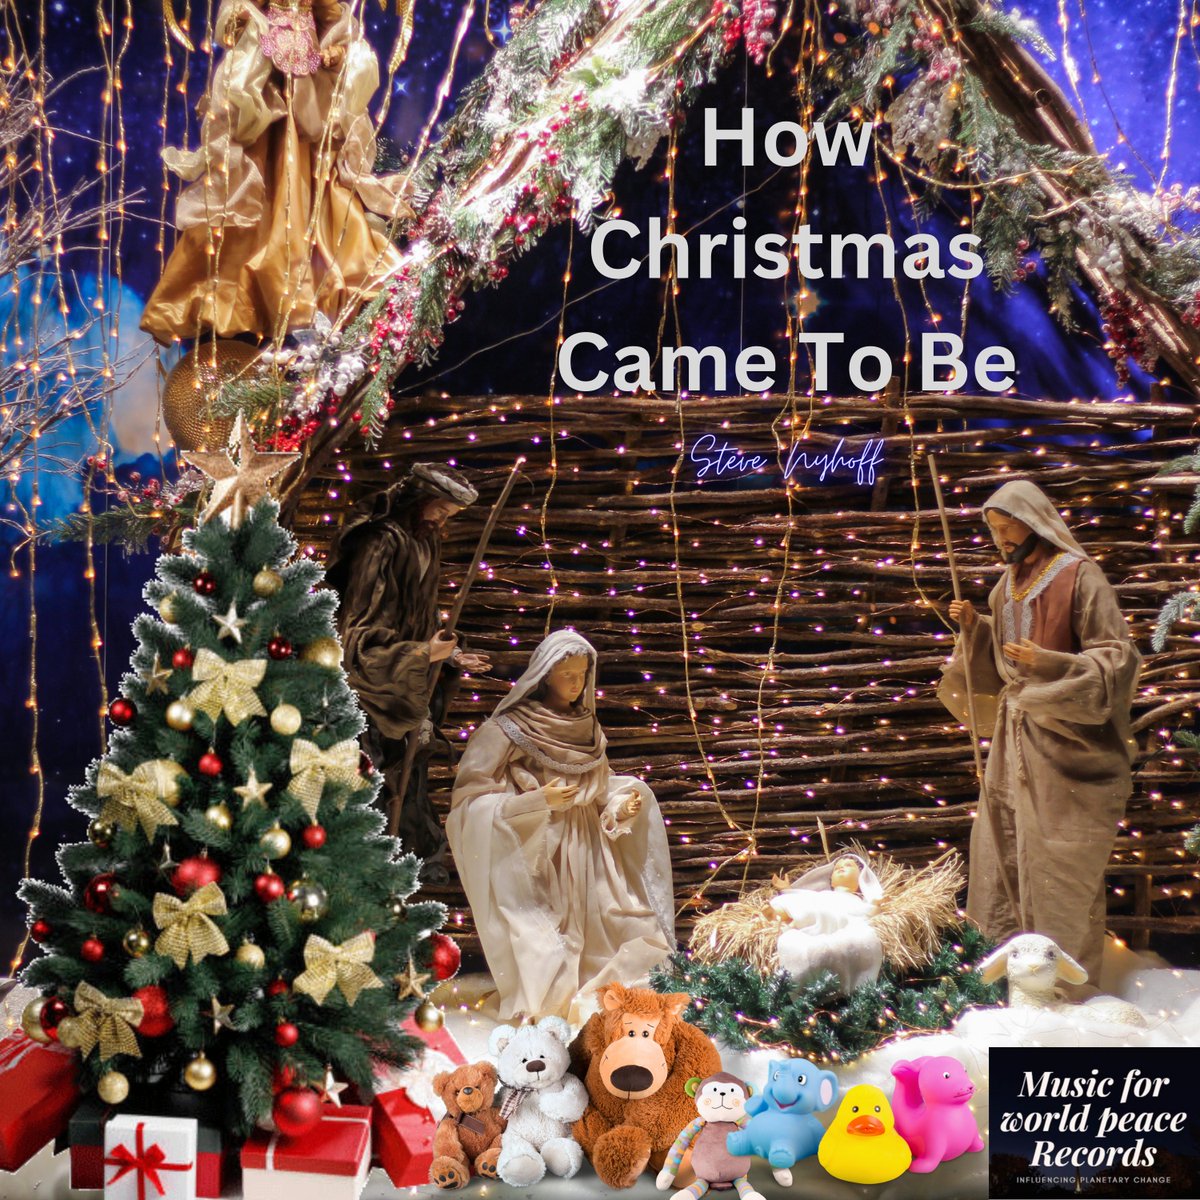 How Christmas Came To Be - Now on YouTube
bit.ly/40S1uR4
#IDWP #MusicForWorldPeace #worldpeace

@KMaster49620335 @CharmedToATee @terri_69_ @rogeronmusic @CarolineLundSF @EdmDutch @RashadaWrites @Tom__Coleman